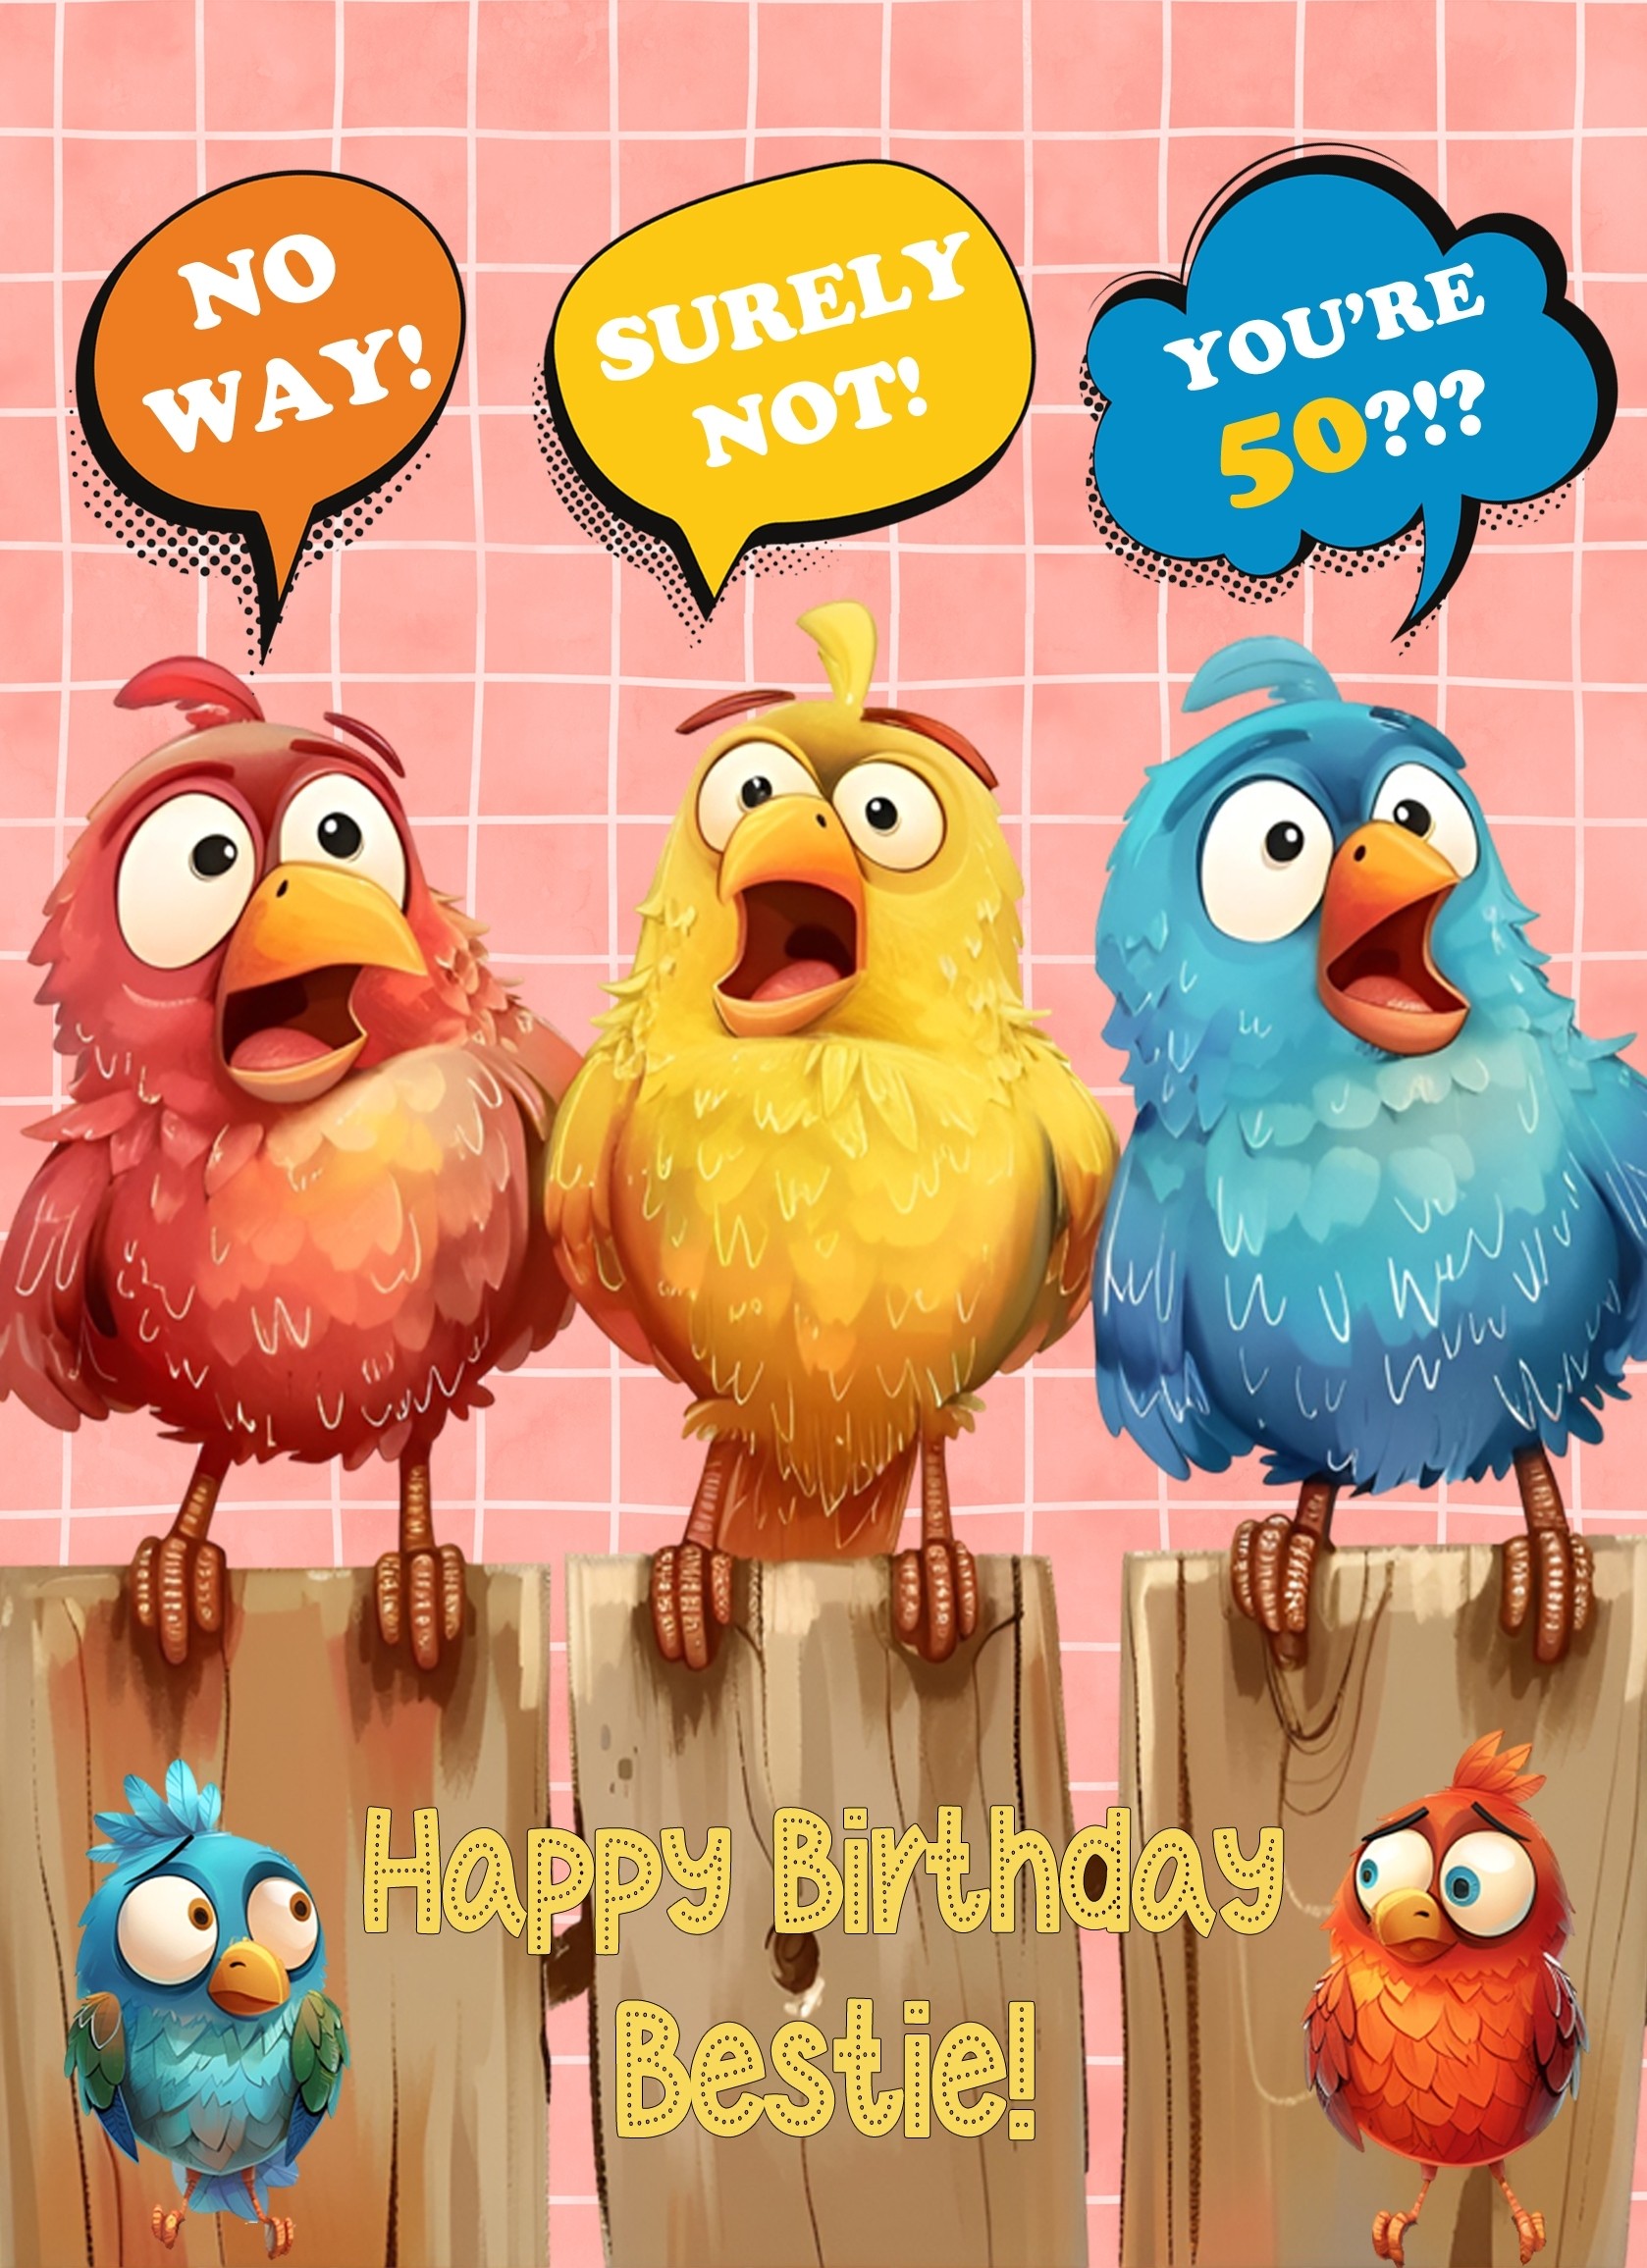 Bestie 50th Birthday Card (Funny Birds Surprised)